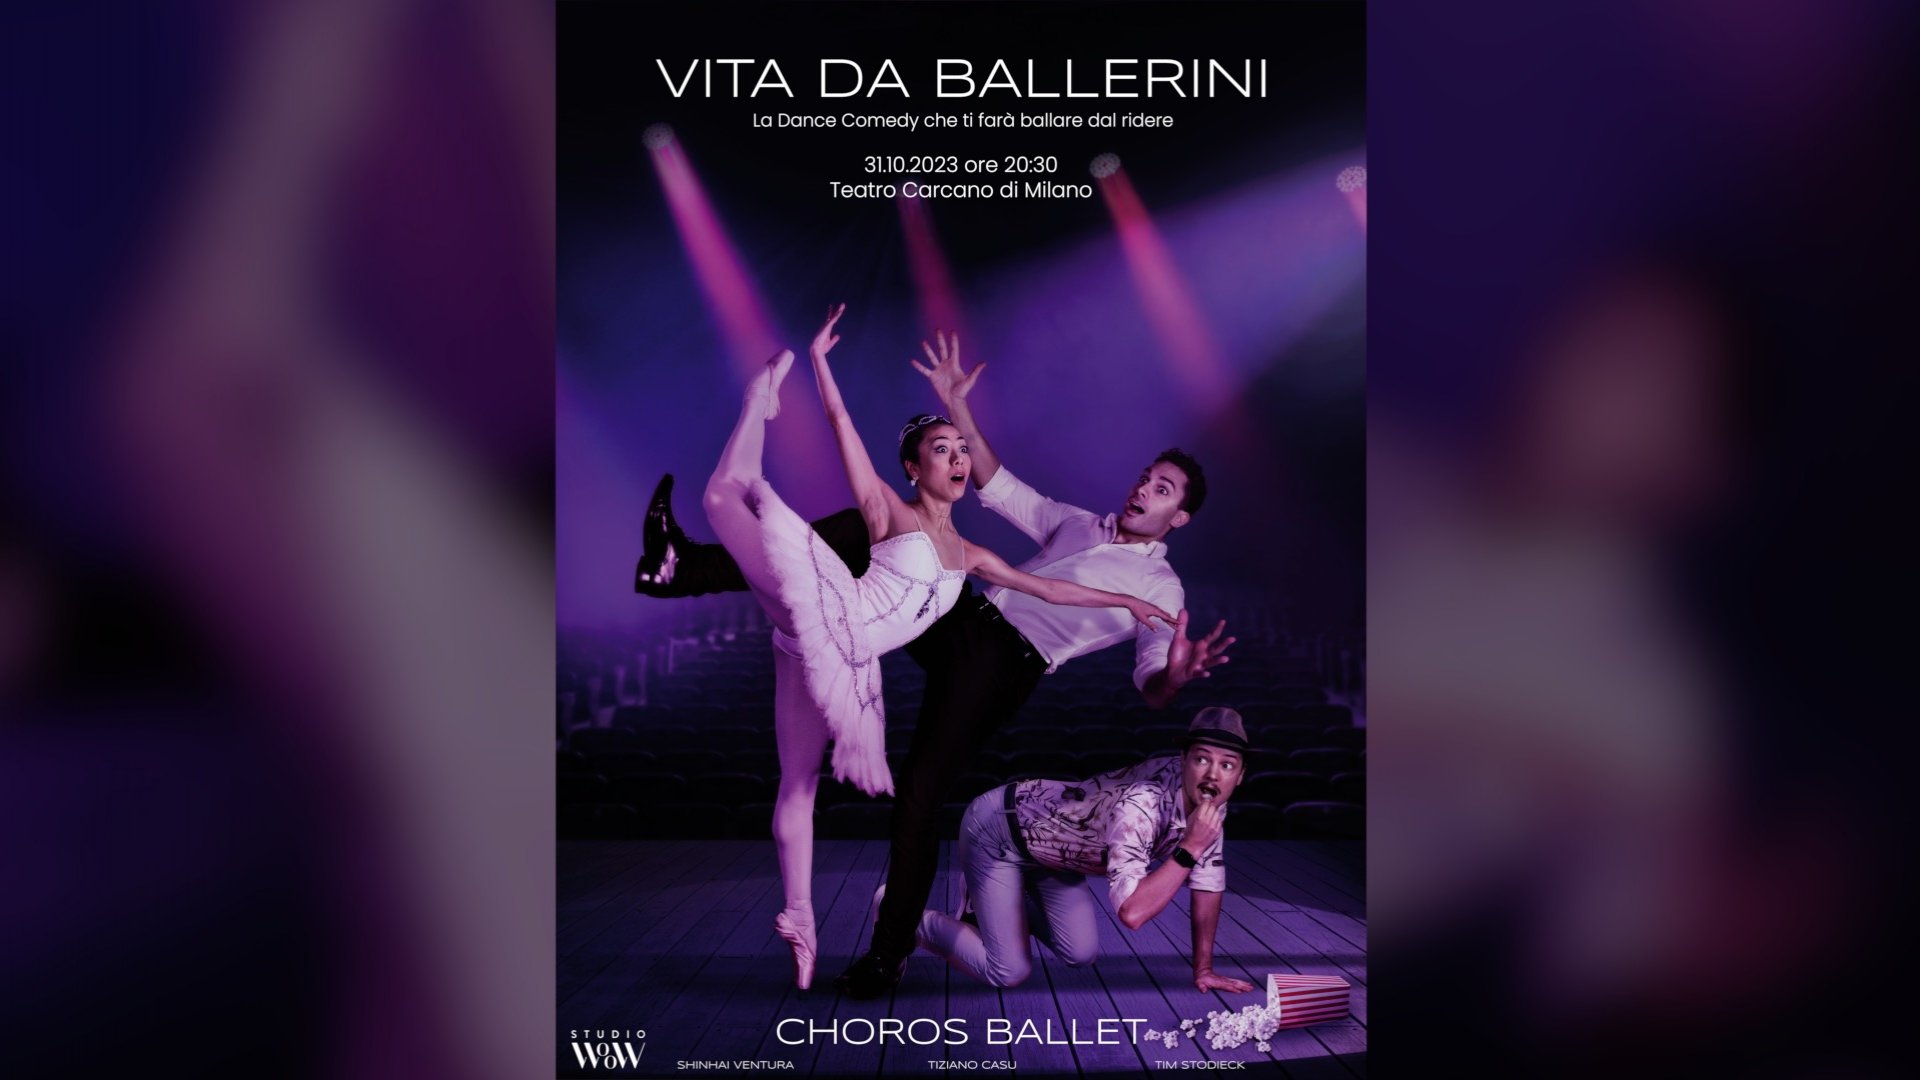 26 e 27/4/24 “Choros Ballet – Vita da ballerini” al Teatro Brancaccio